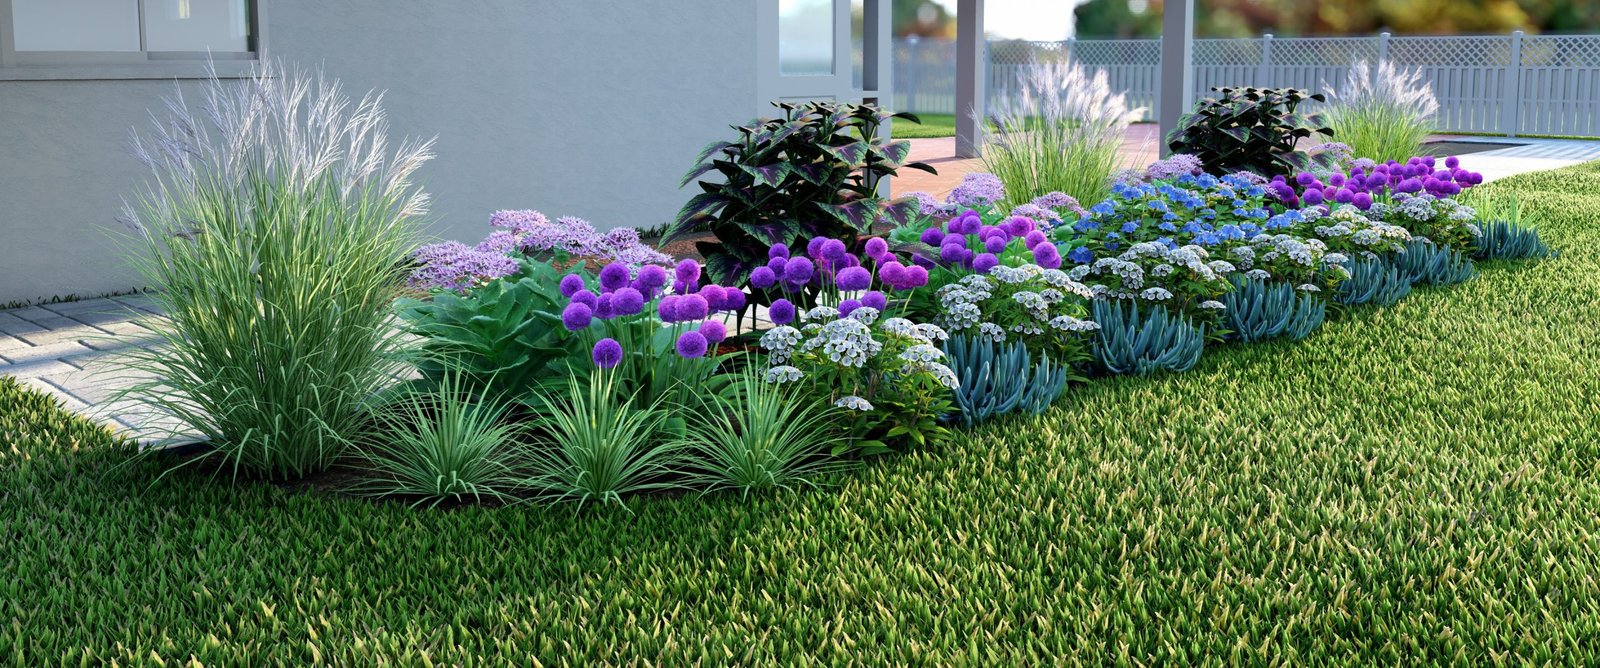 Flower Bed Landscaping Design For Walkway